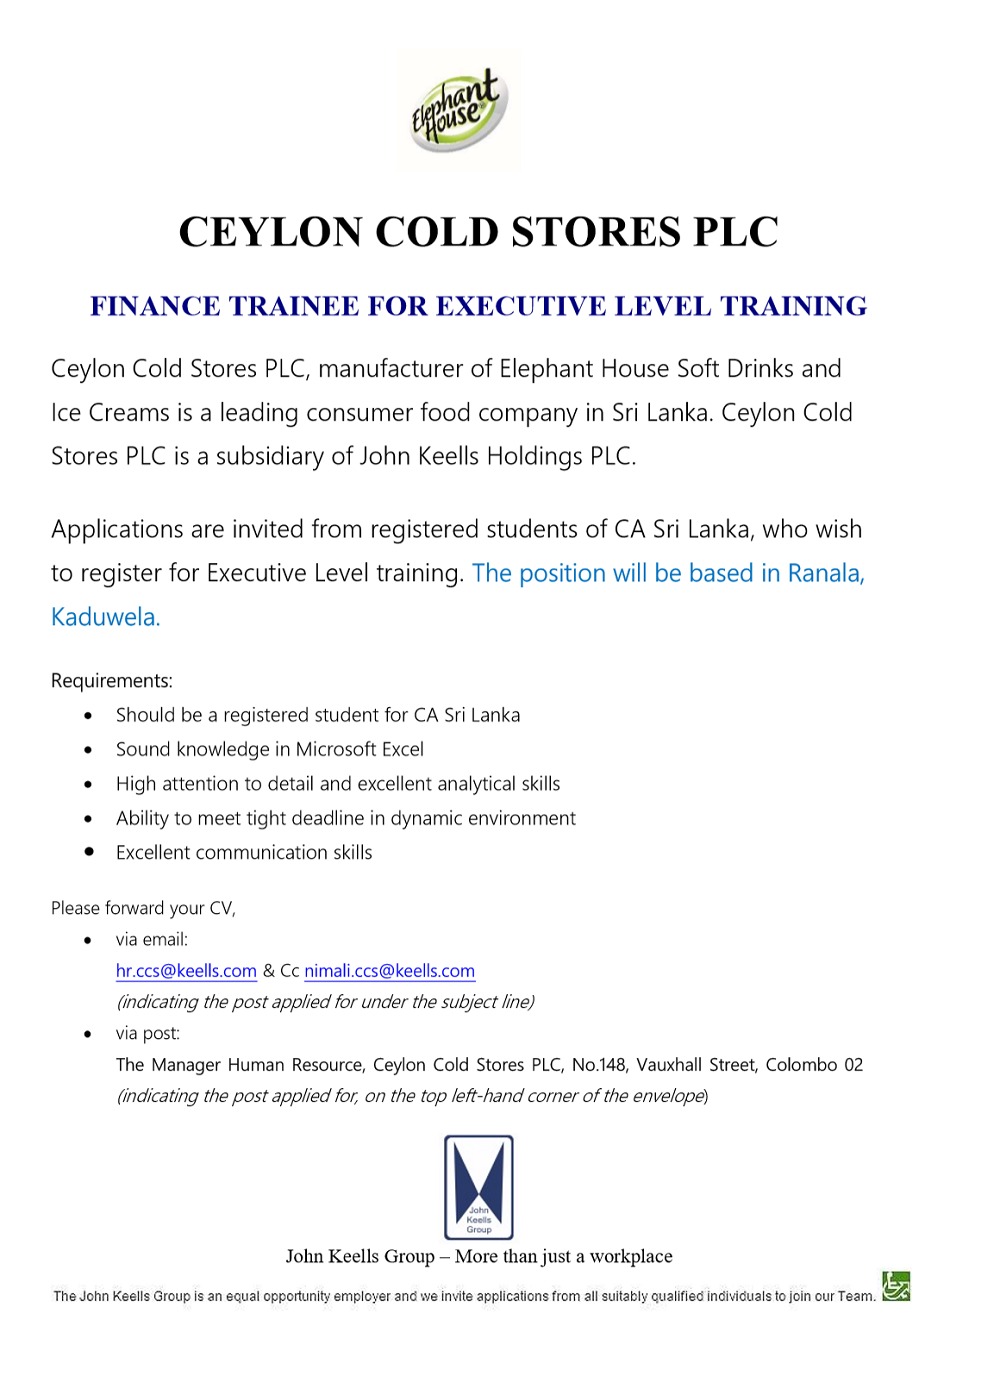 Finance Trainee Jobs Vacancies - Ceylon Cold Stores (Elephant House) Jobs Vacancies